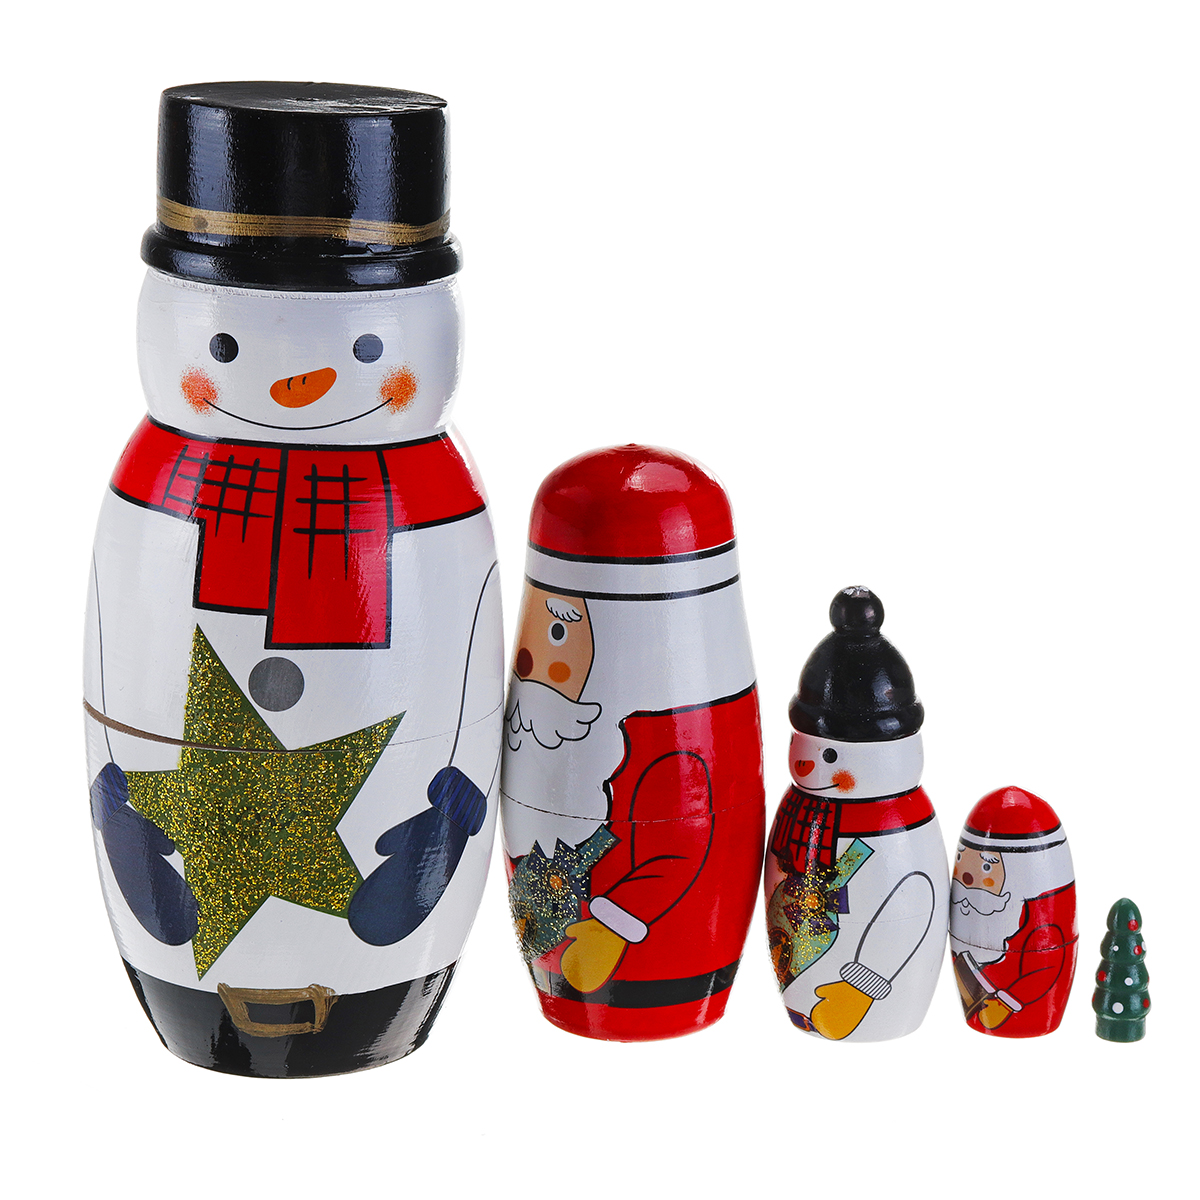 5PCS-Russian-Wooden-Nesting-Matryoshka-Doll-Handcraft-Decoration-Christmas-Gifts-1395246-4